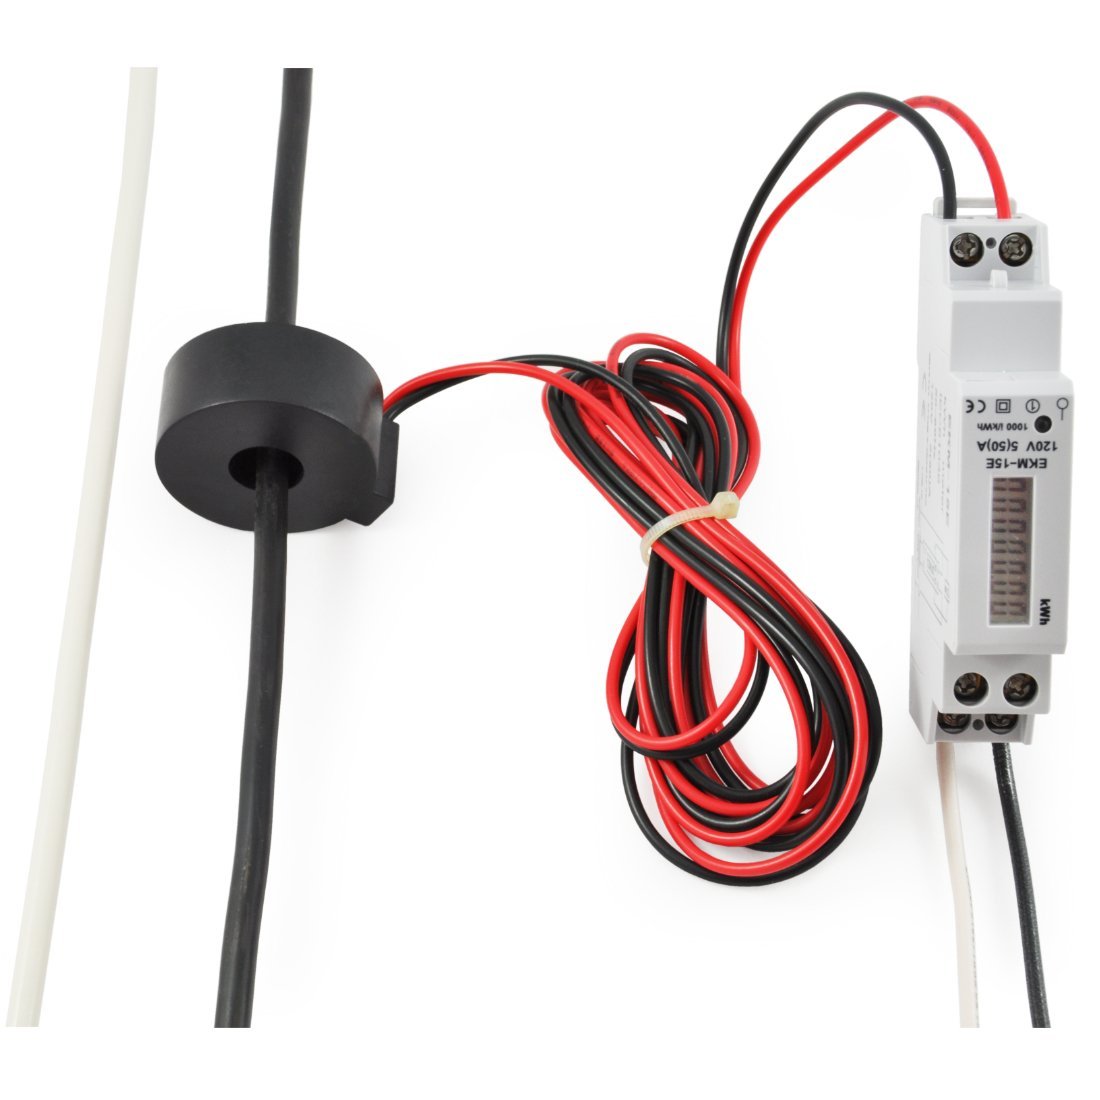 Basic kWh Meter 14mm 120 volt, 2-wire, External CT Meter. 50 Amp. Pulse output EKM-15E - EKM Metering Inc.